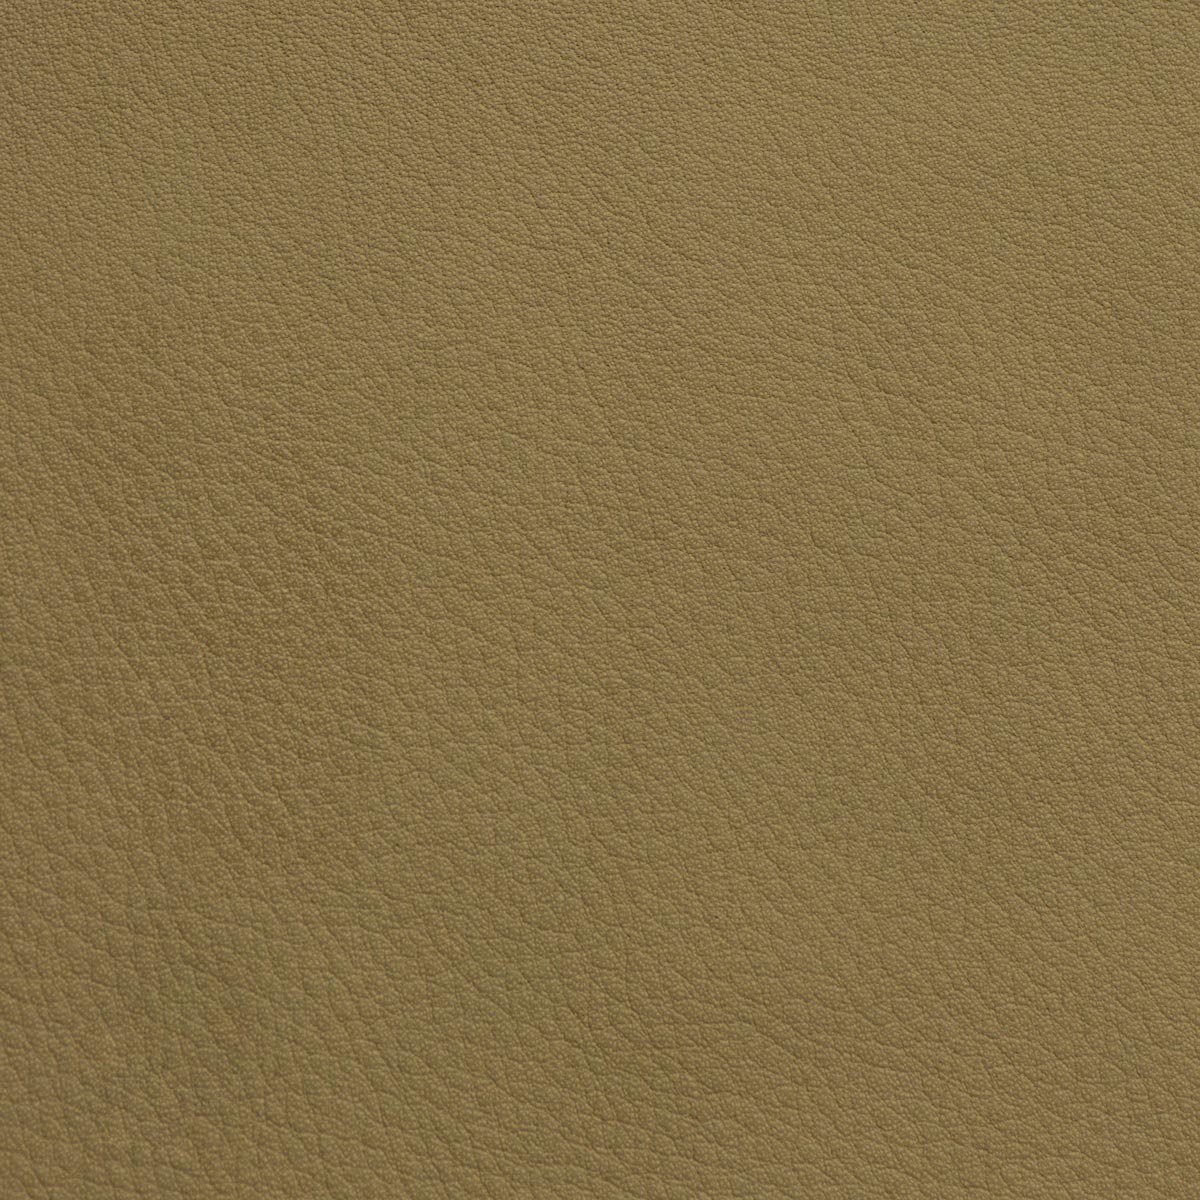 Honeycomb - Embossed Leather - Jamie Stern Design